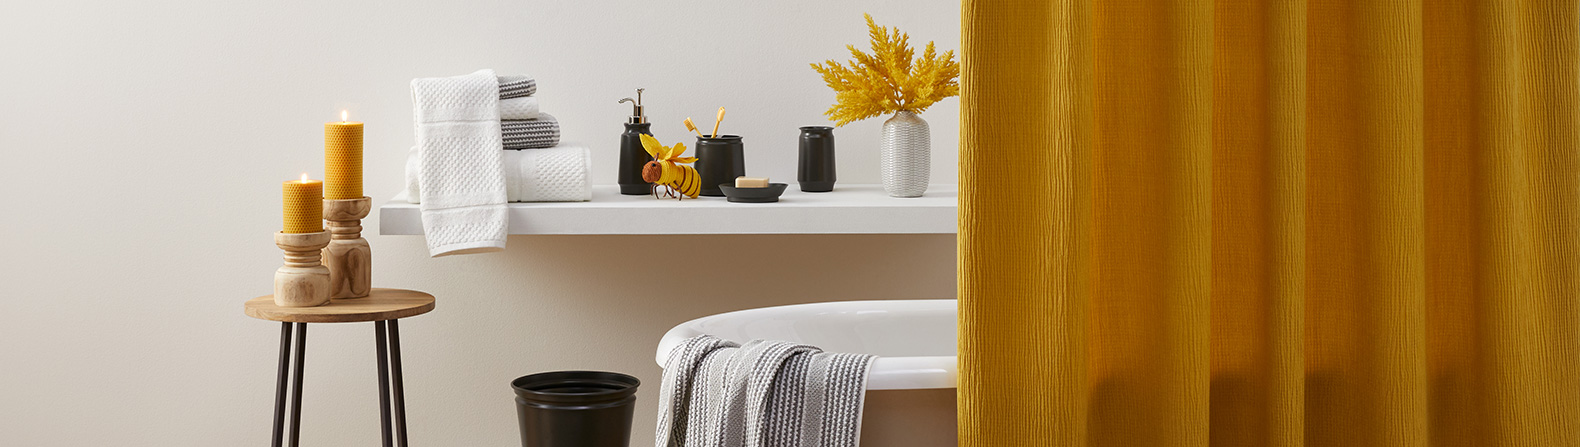 Honey-Can-Do Bathroom Accessory Sets - Bed Bath & Beyond